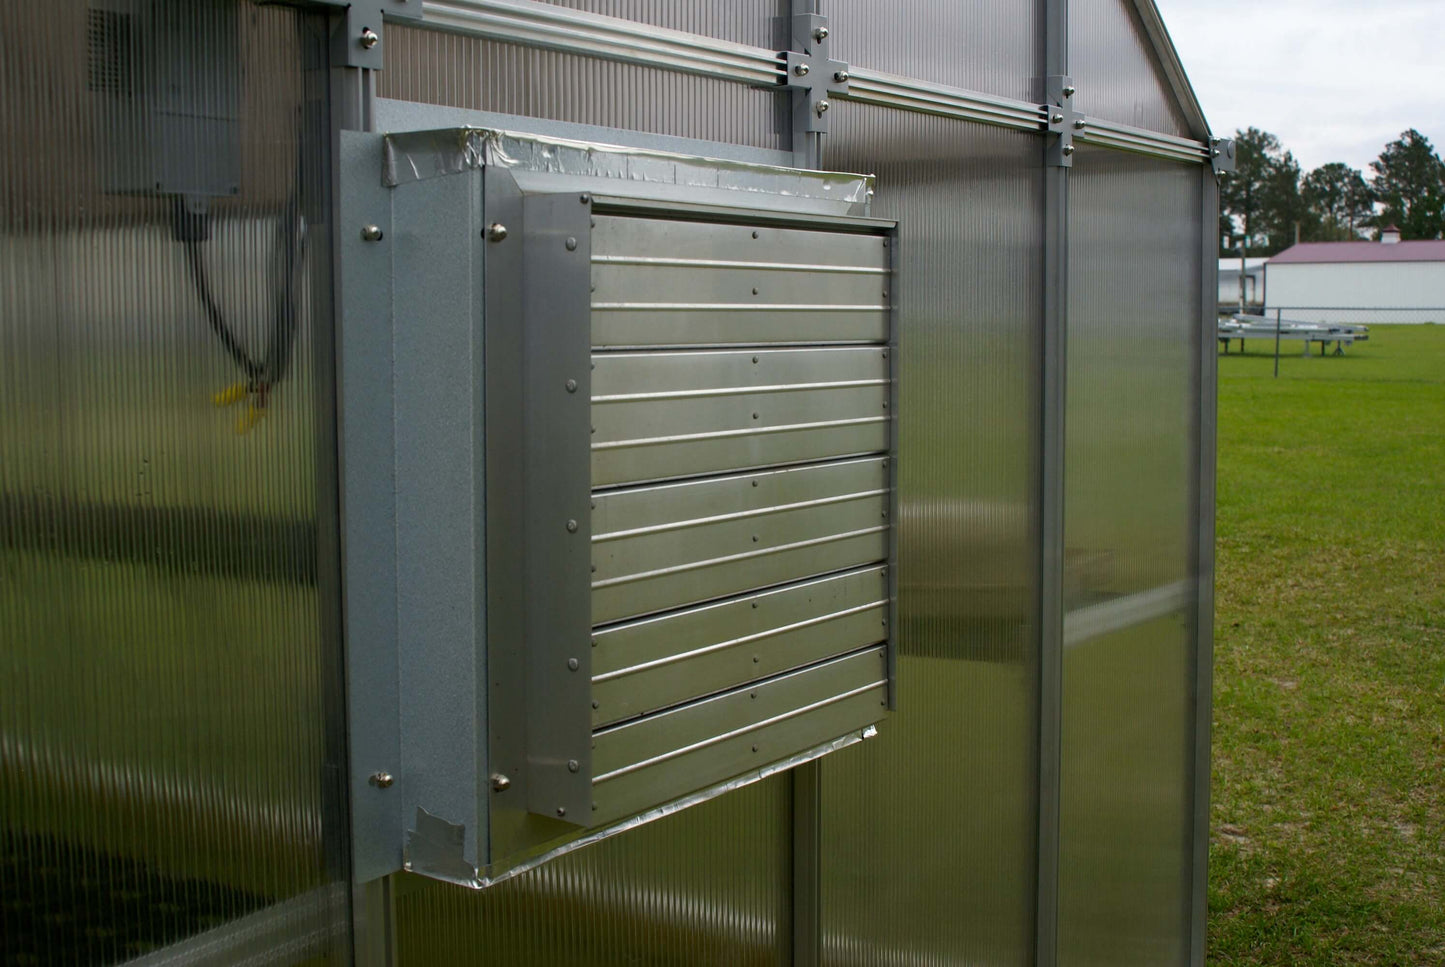 MONT Solar Powered Ventilation System